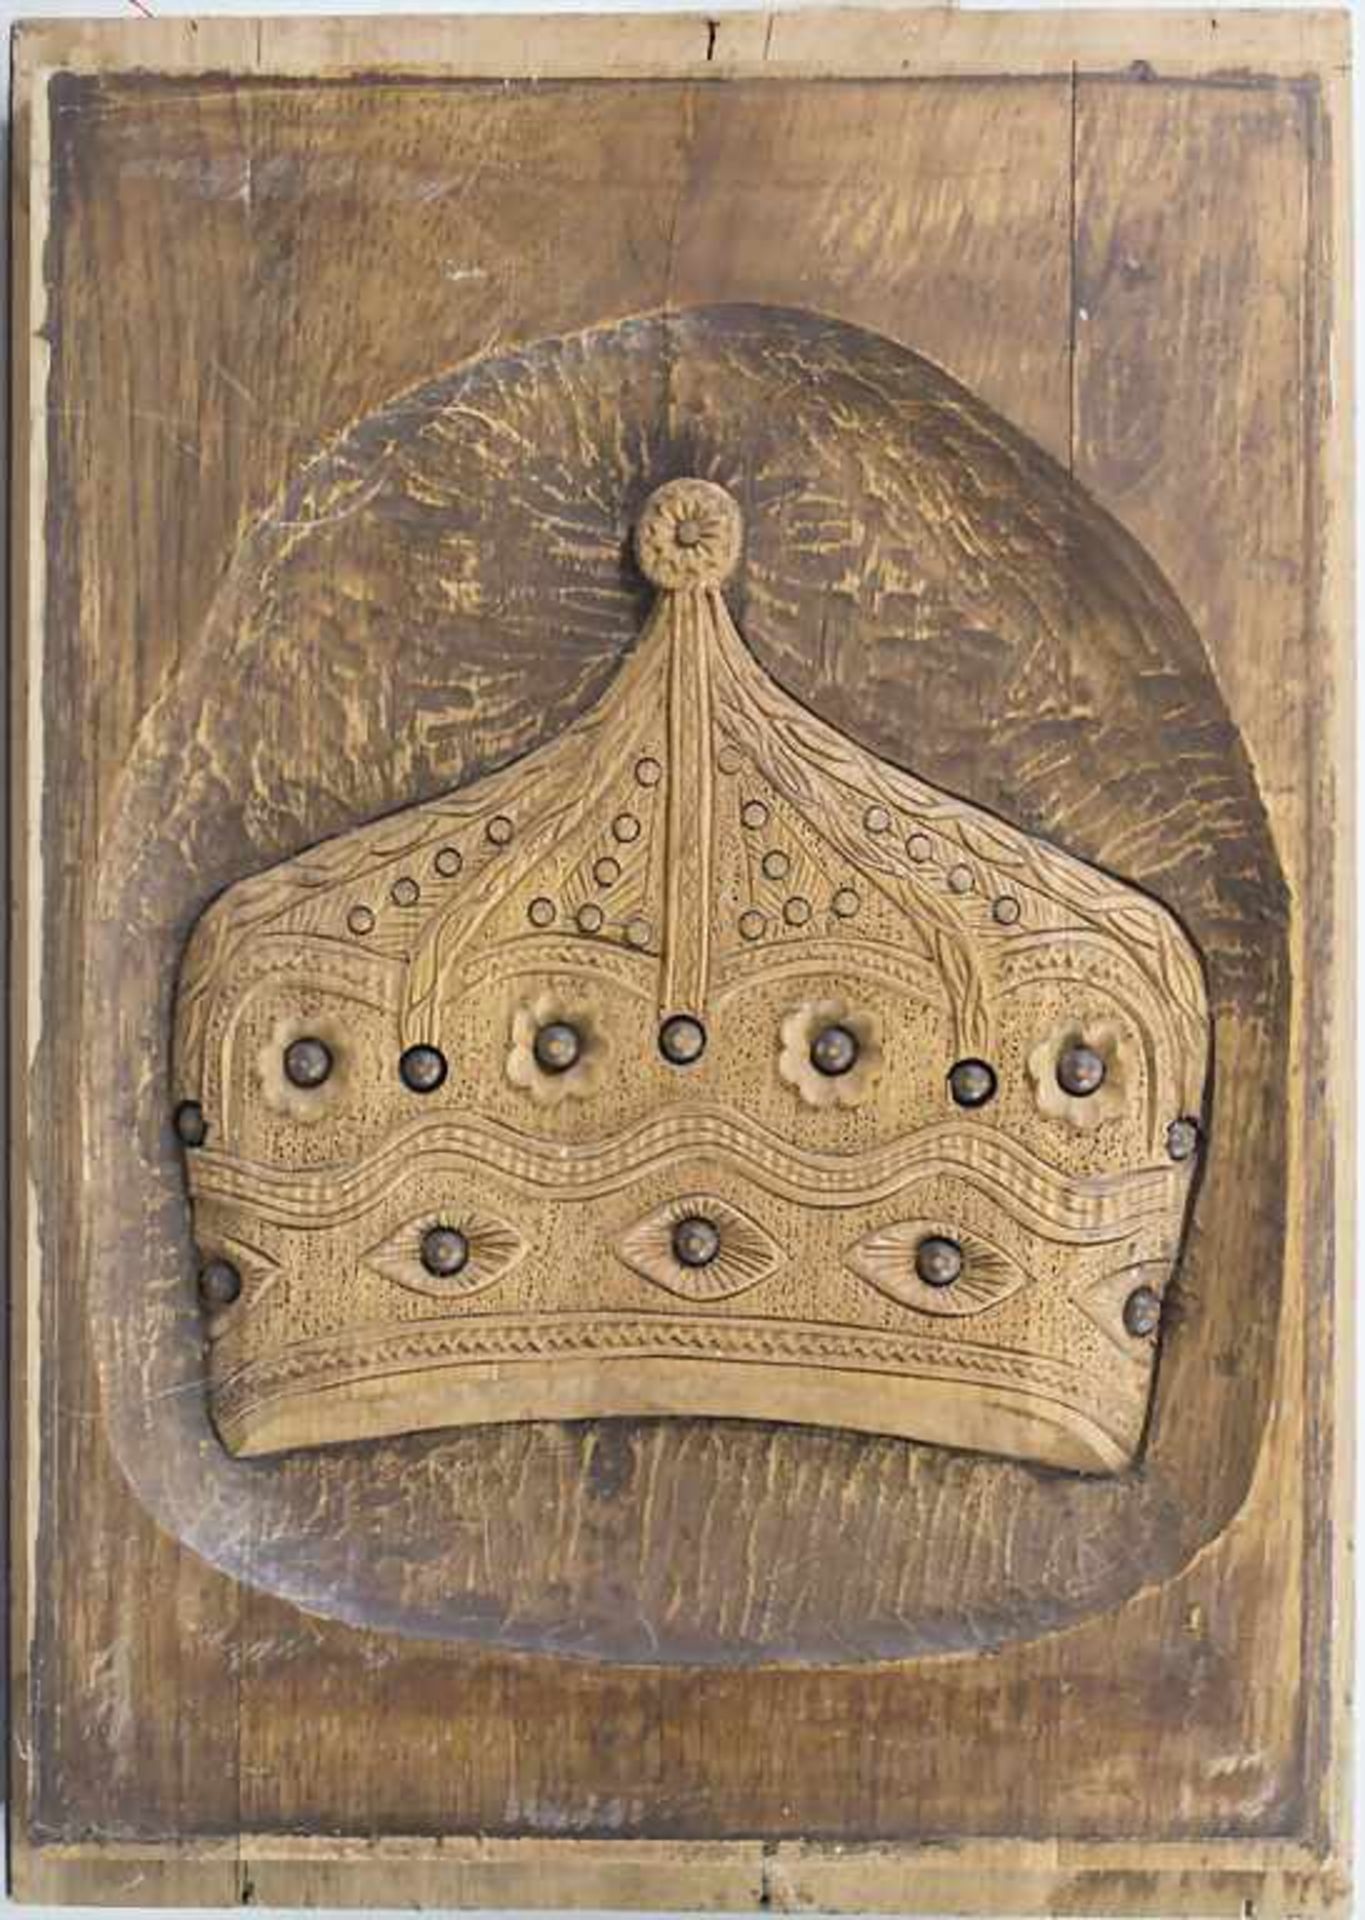 Reliefbild 'Krone' / A relief 'Crown'Technik: Holz, geschnitzt, partiell dunkel lasier